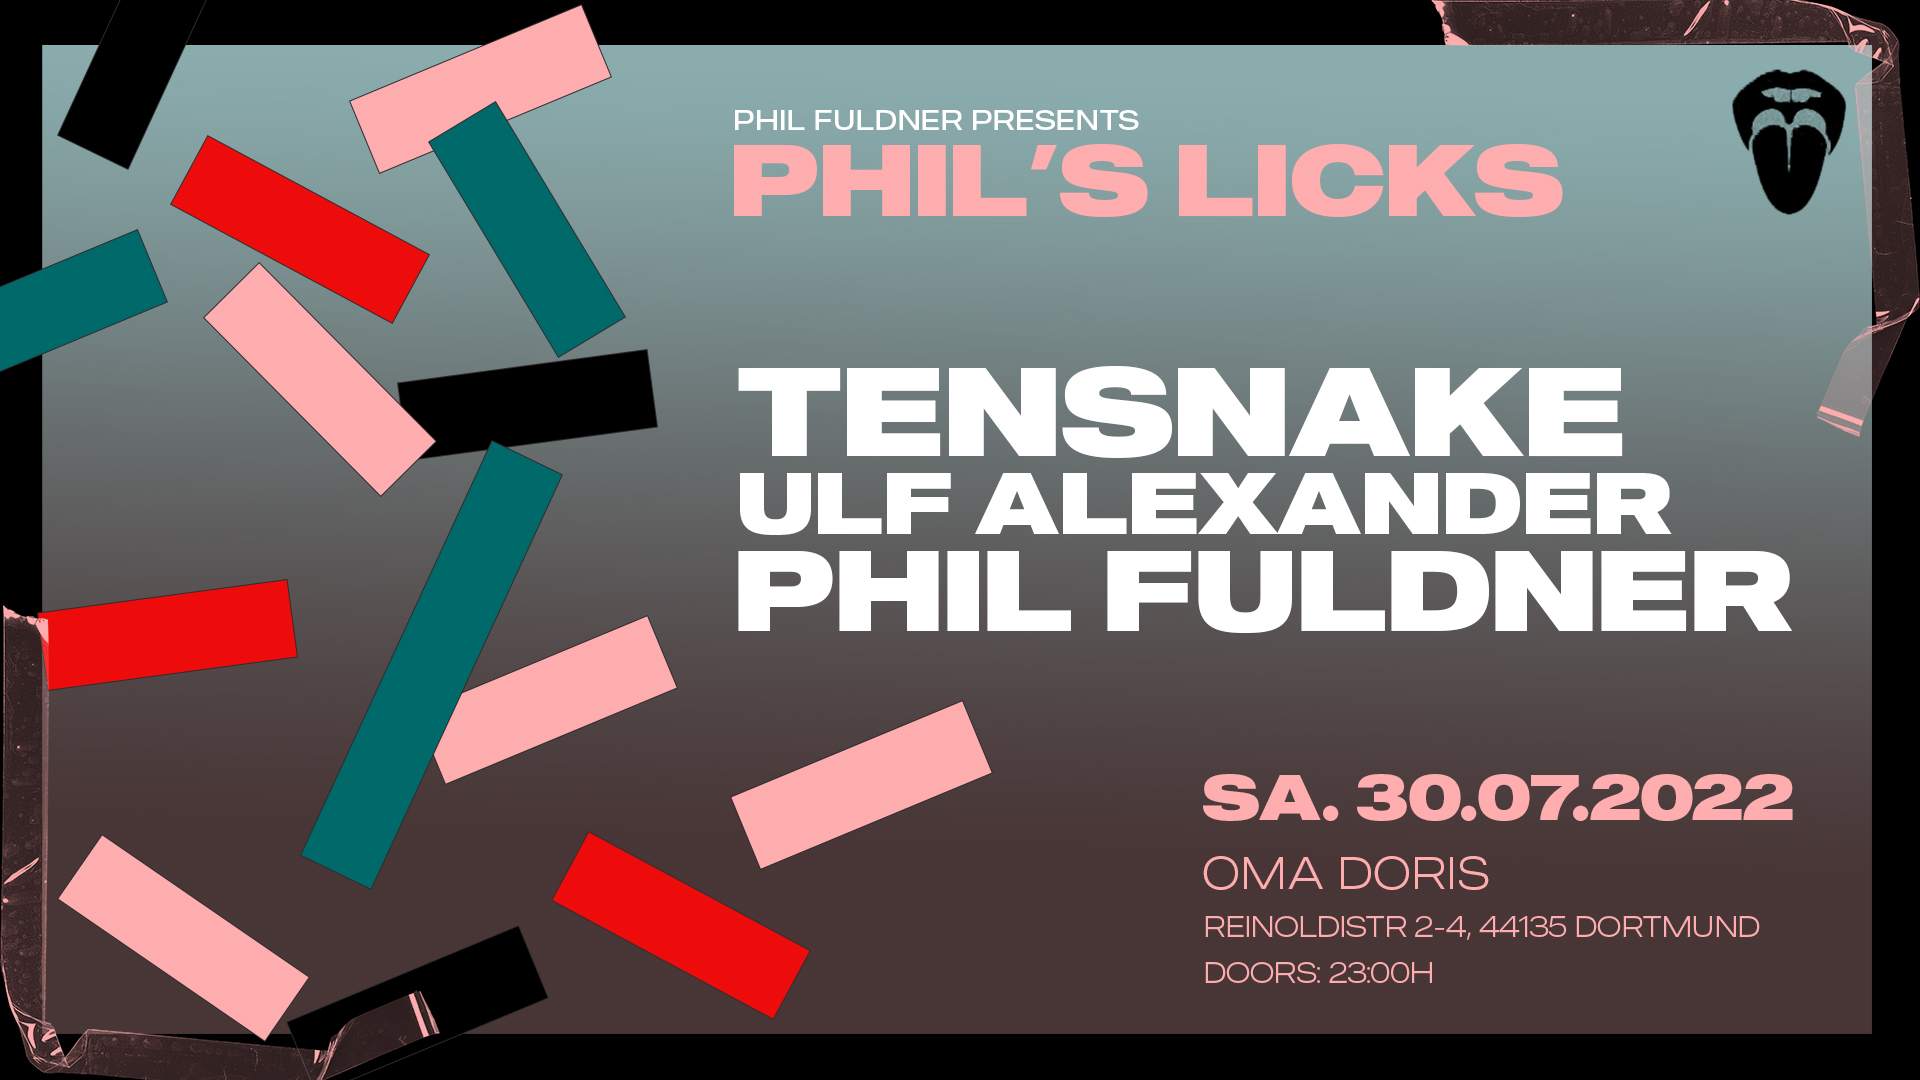 Phil's Licks with Tensnake, Phil Fuldner & Ulf Alexander - フライヤー表